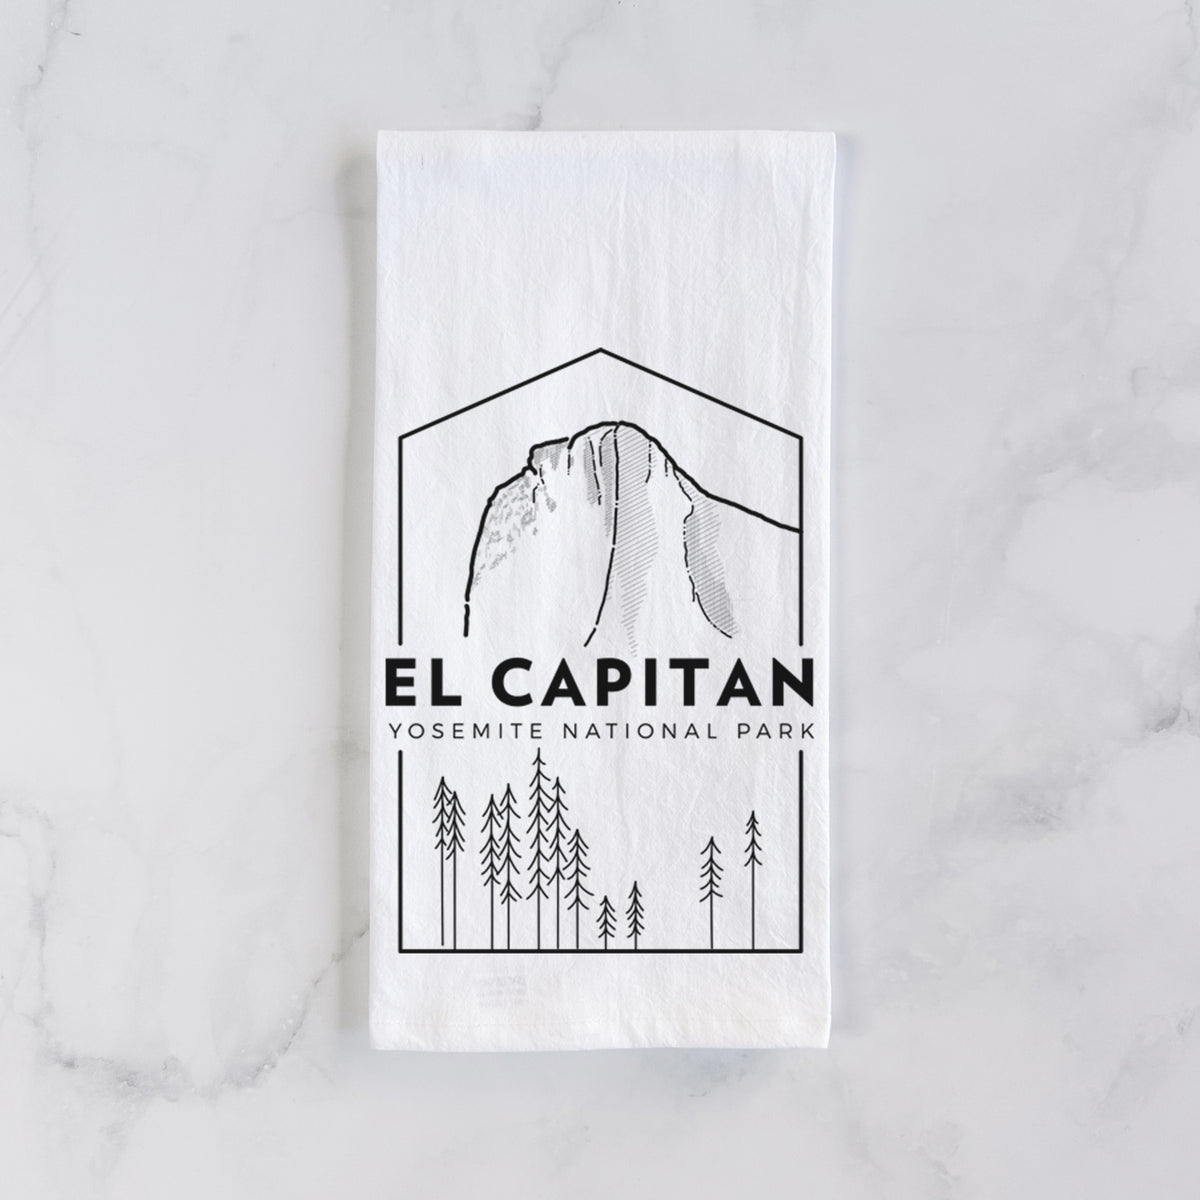 El Capitan - Yosemite National Park Tea Towel